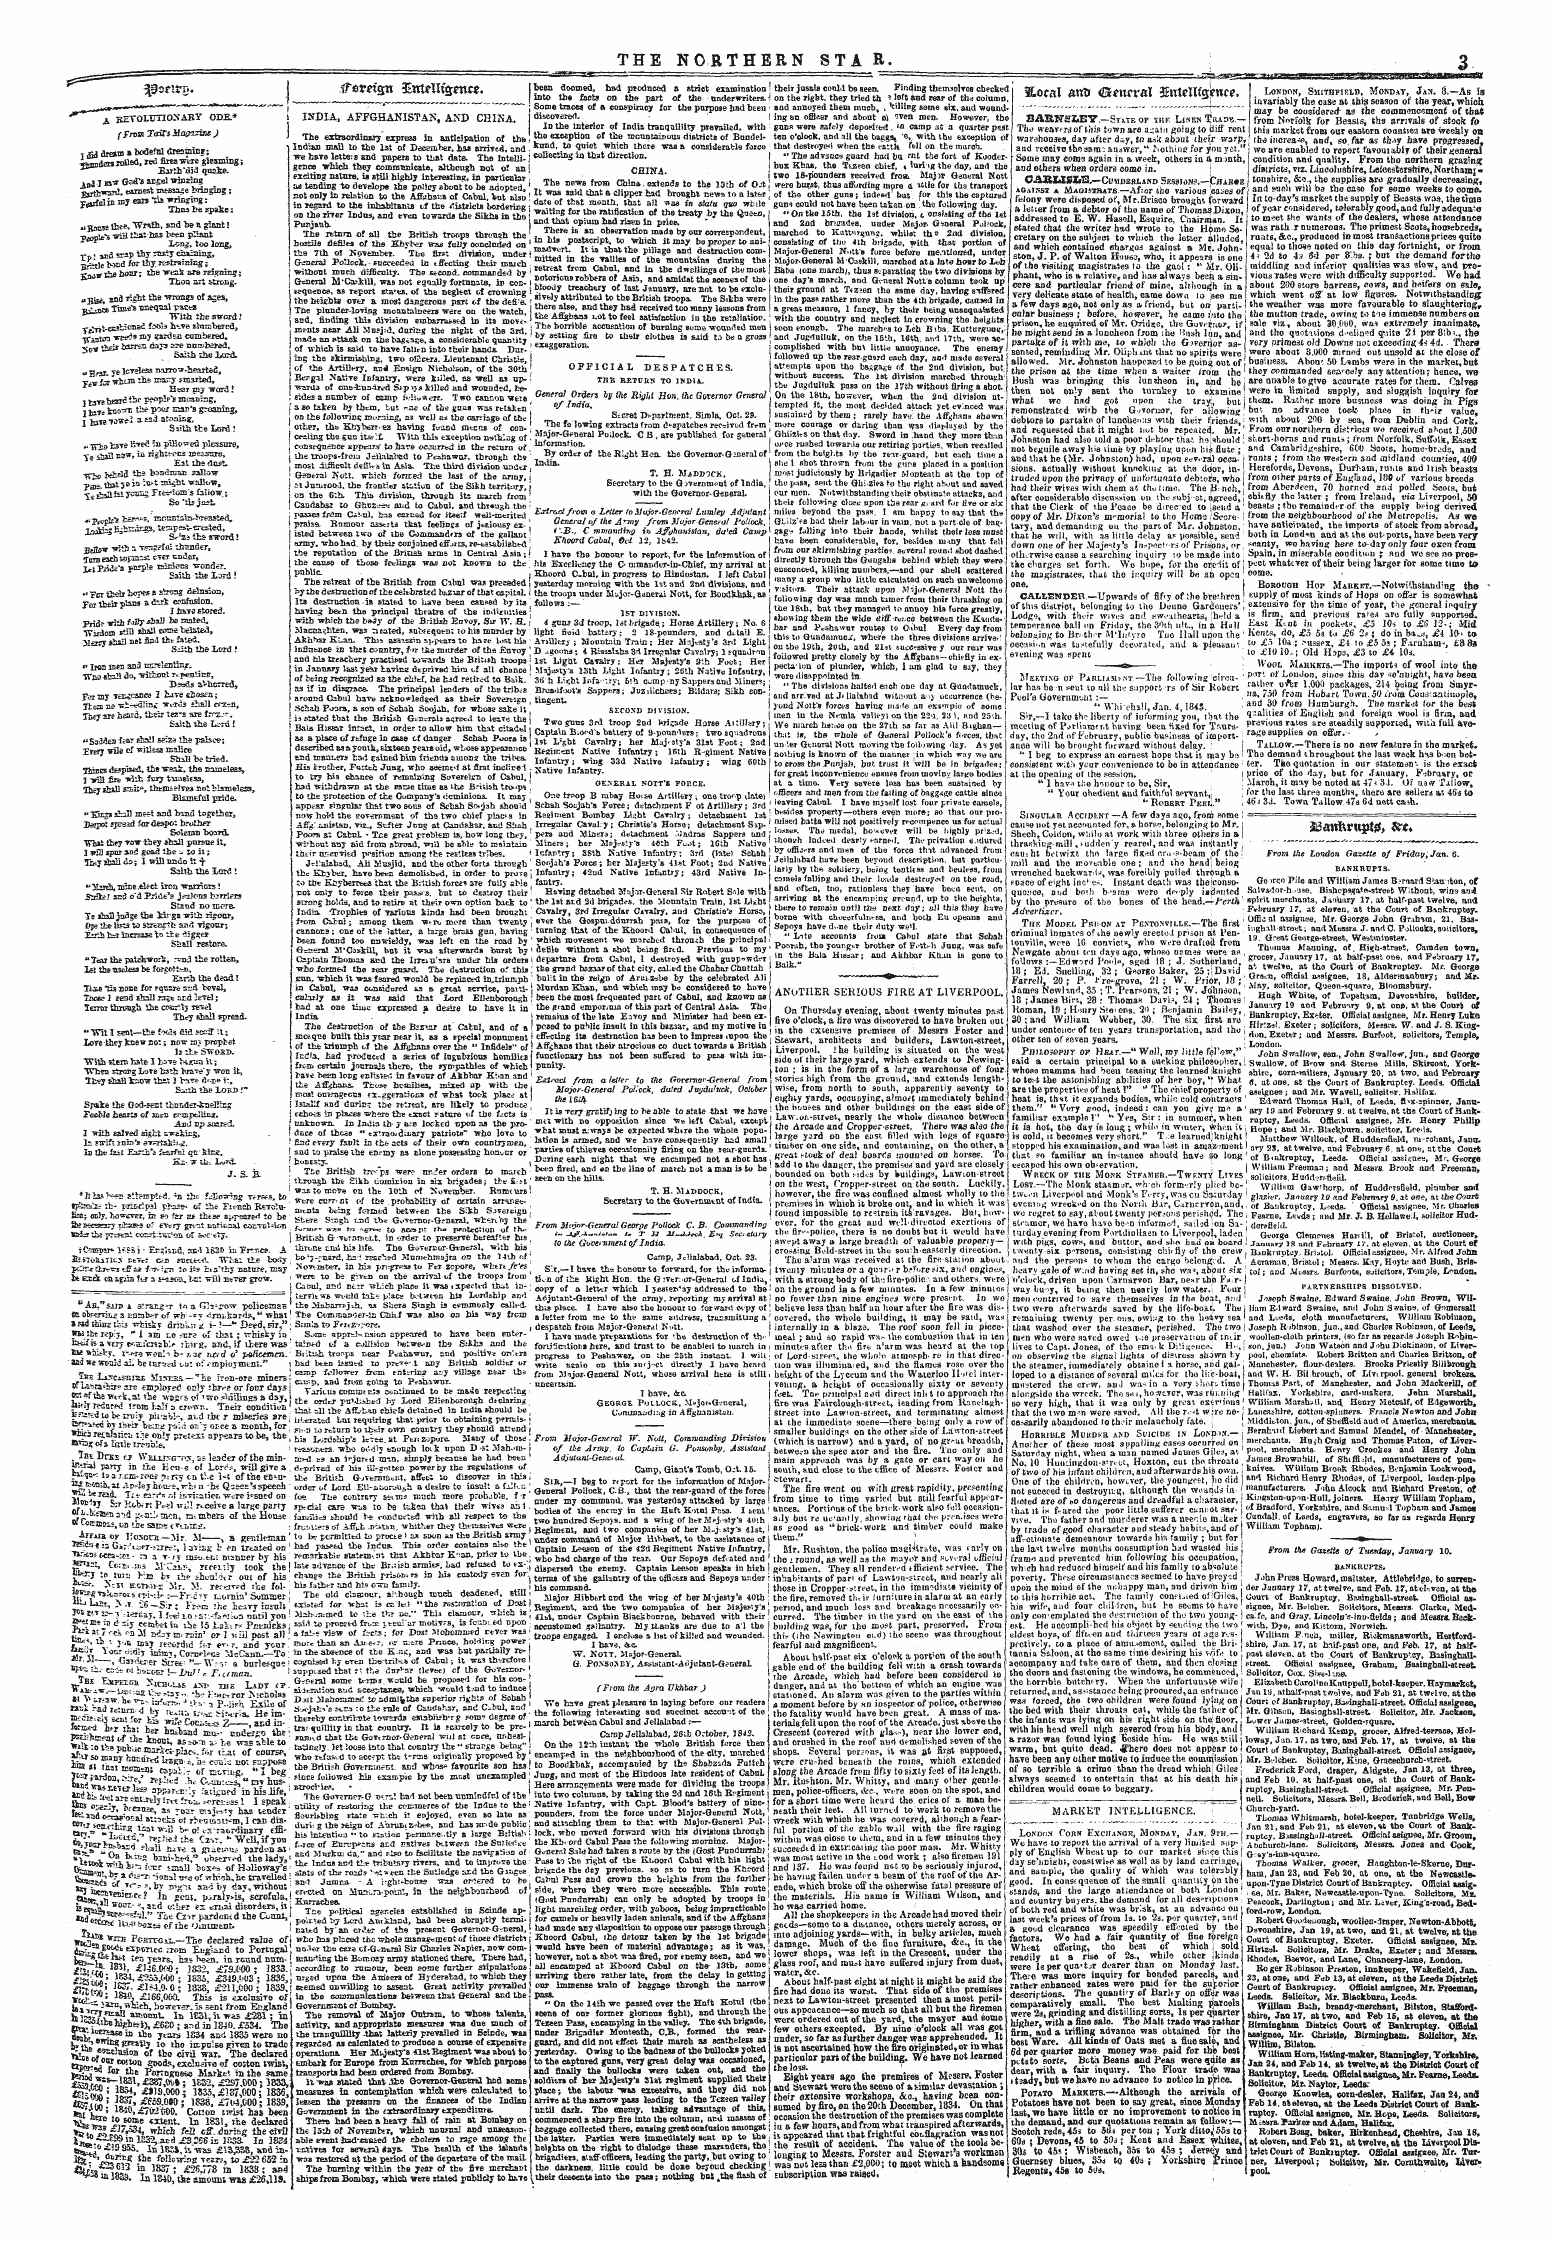 Northern Star (1837-1852): jS F Y, 4th edition - 1' 1 1 '•Ustsjgs Slocal Aut» ©Literal 3£Utcll(Sfmc?.